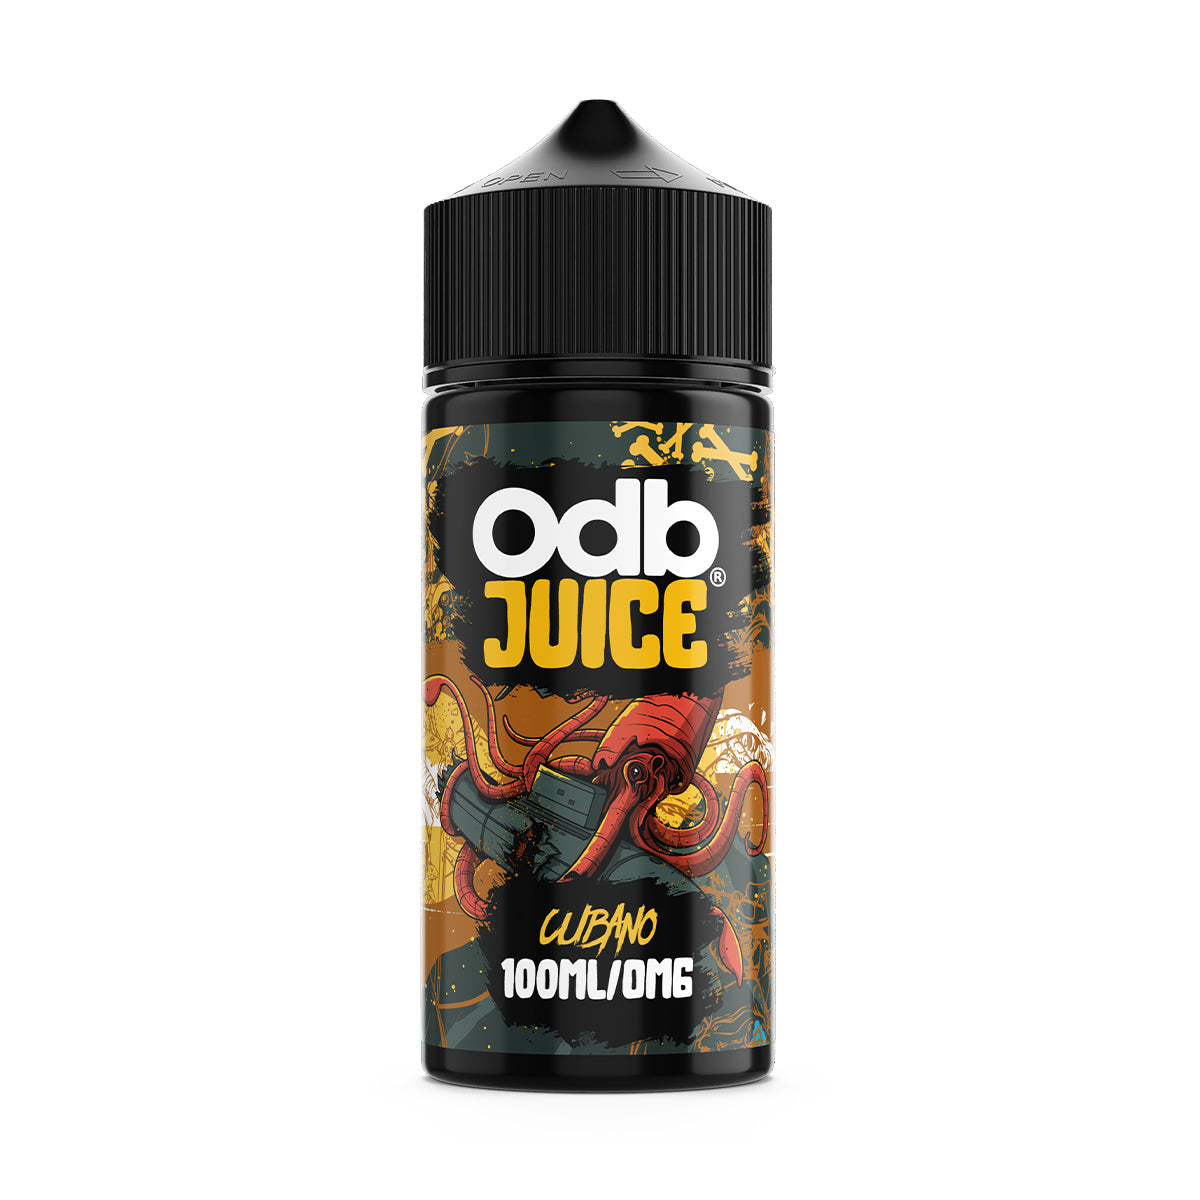 ODB Juice - Cubano 100ml